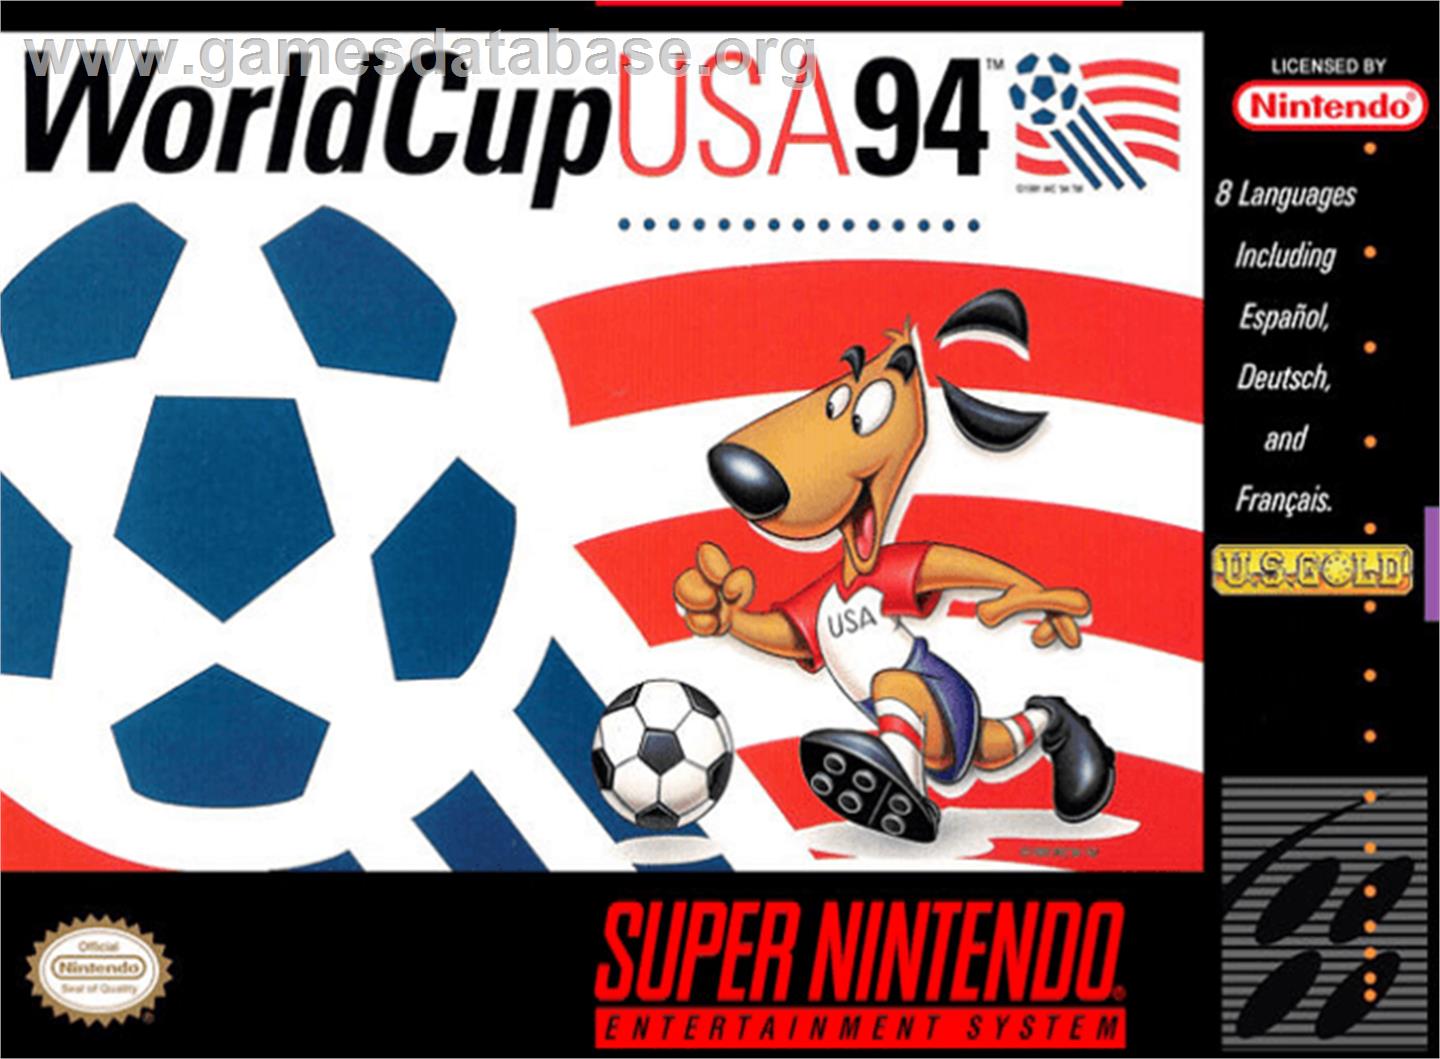 World Cup USA '94 - Nintendo SNES - Artwork - Box